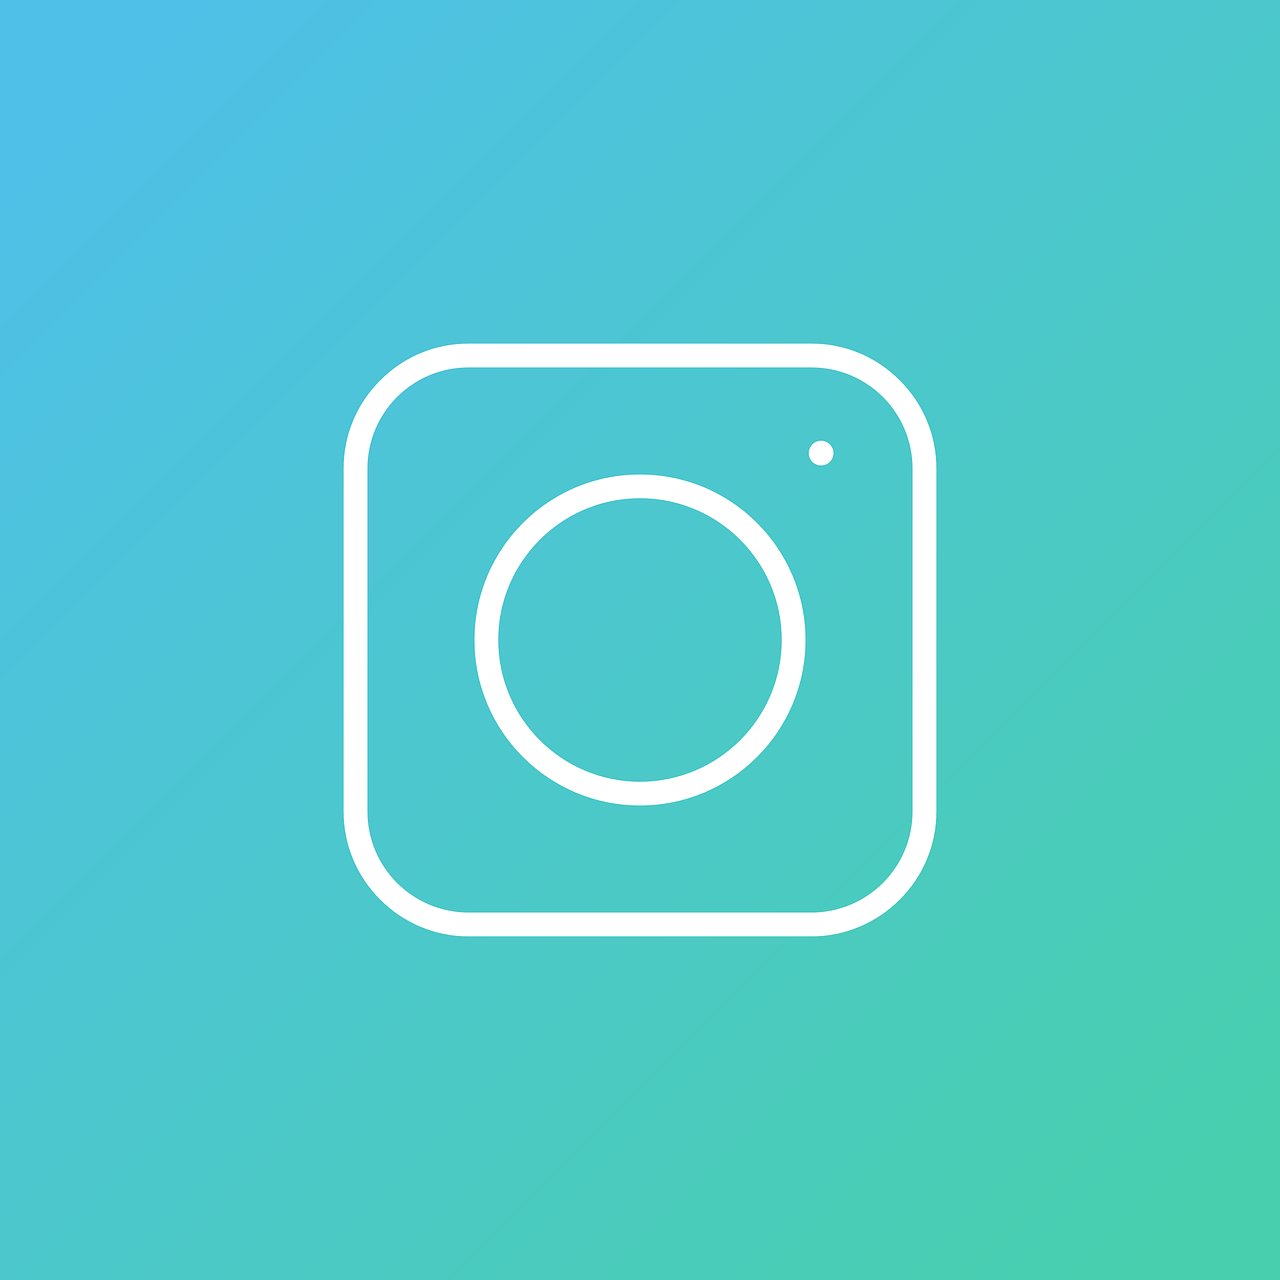 Instagram,insta,instagram logo,instagram icon,instagram symbol - free ...